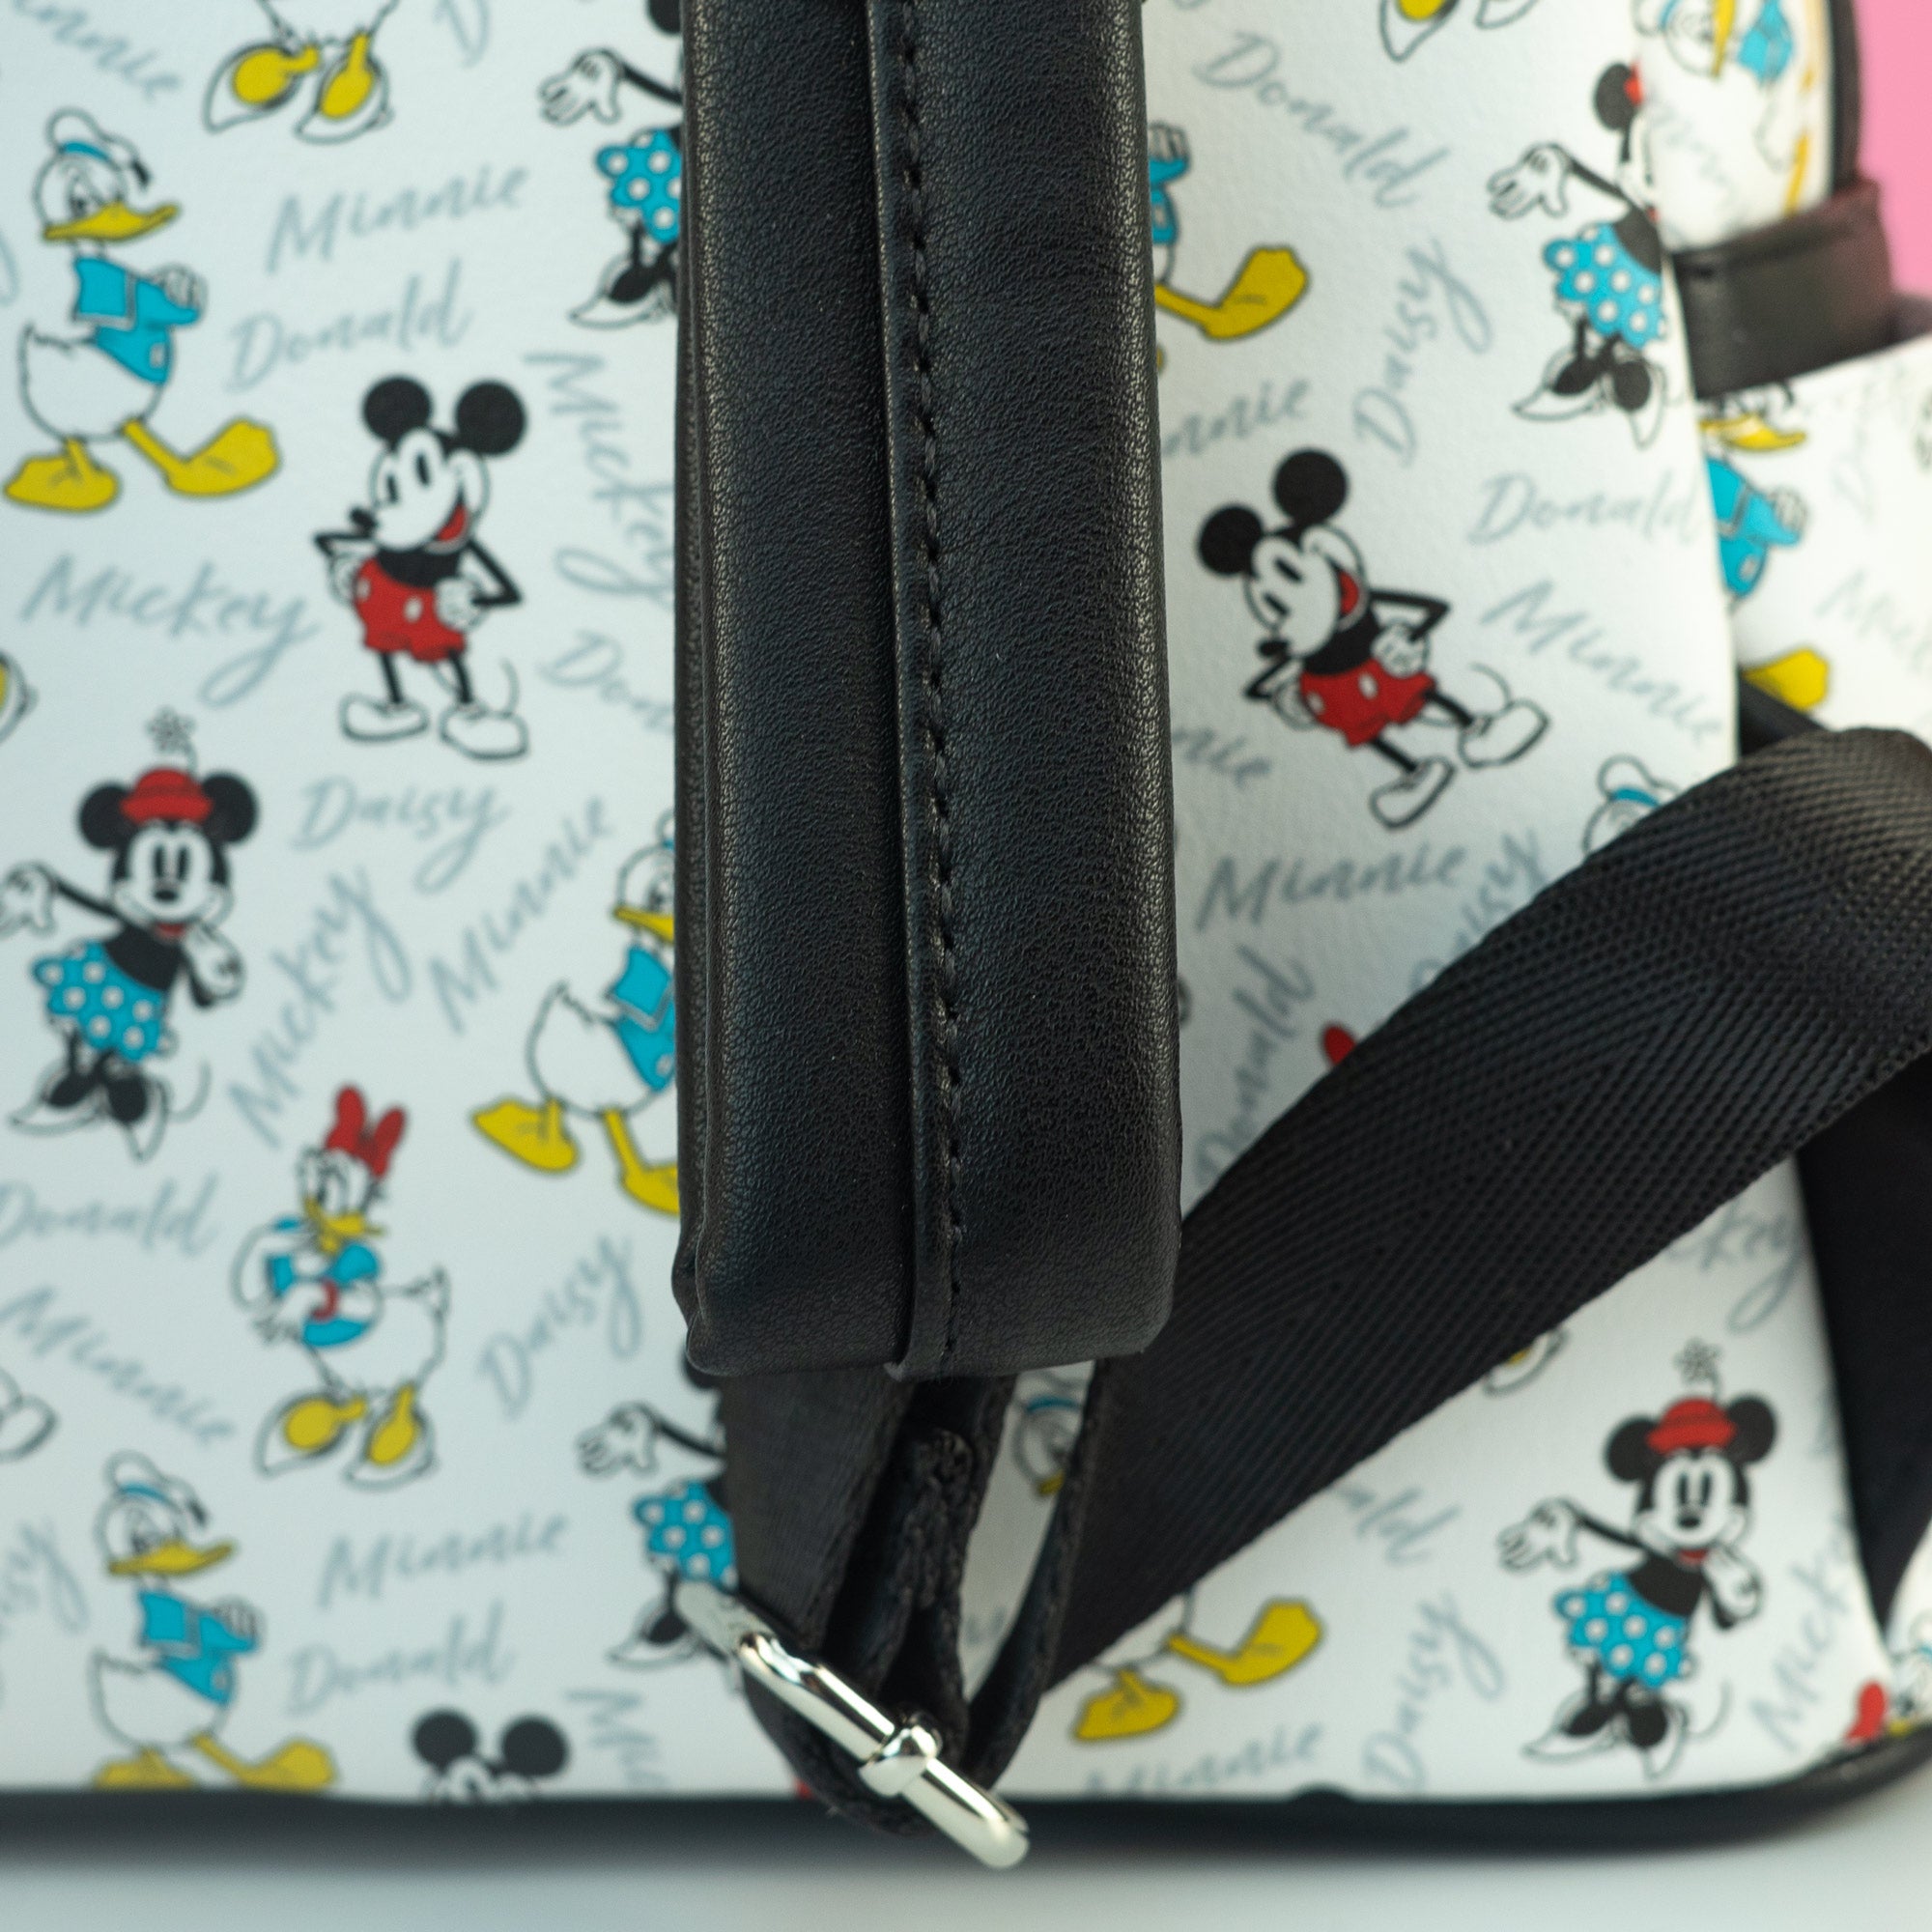 Loungefly x Disney Mickey, Minnie, Donald and Daisy AOP Mini Backpack